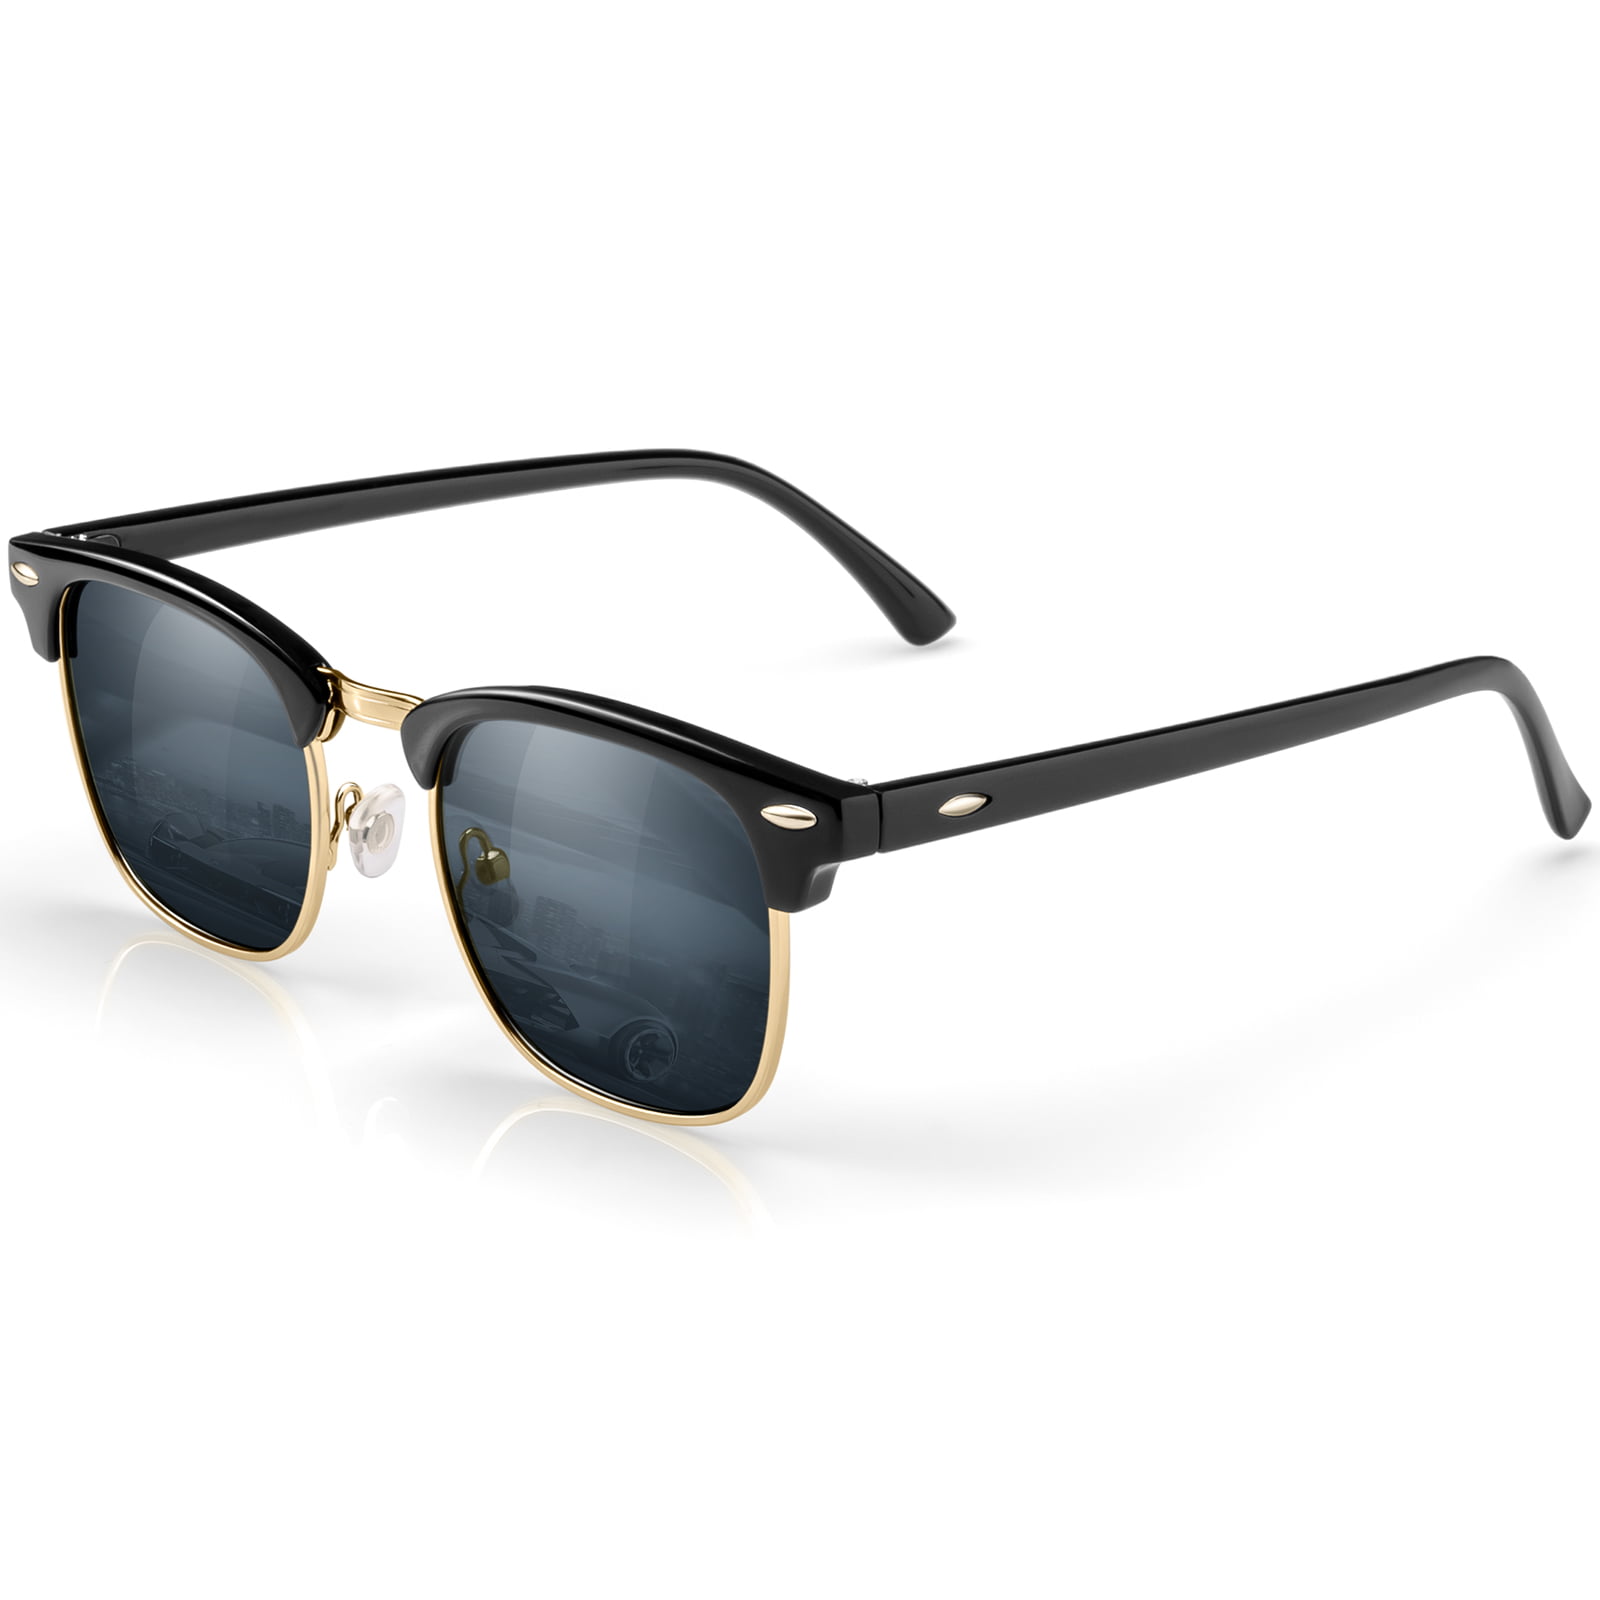 AABV Folding Polarized Sunglasses, UV400 Protection Anti Glare TR90 Folding Frame Sun Glasses with Handy Case-Black, Women's, Size: One Size